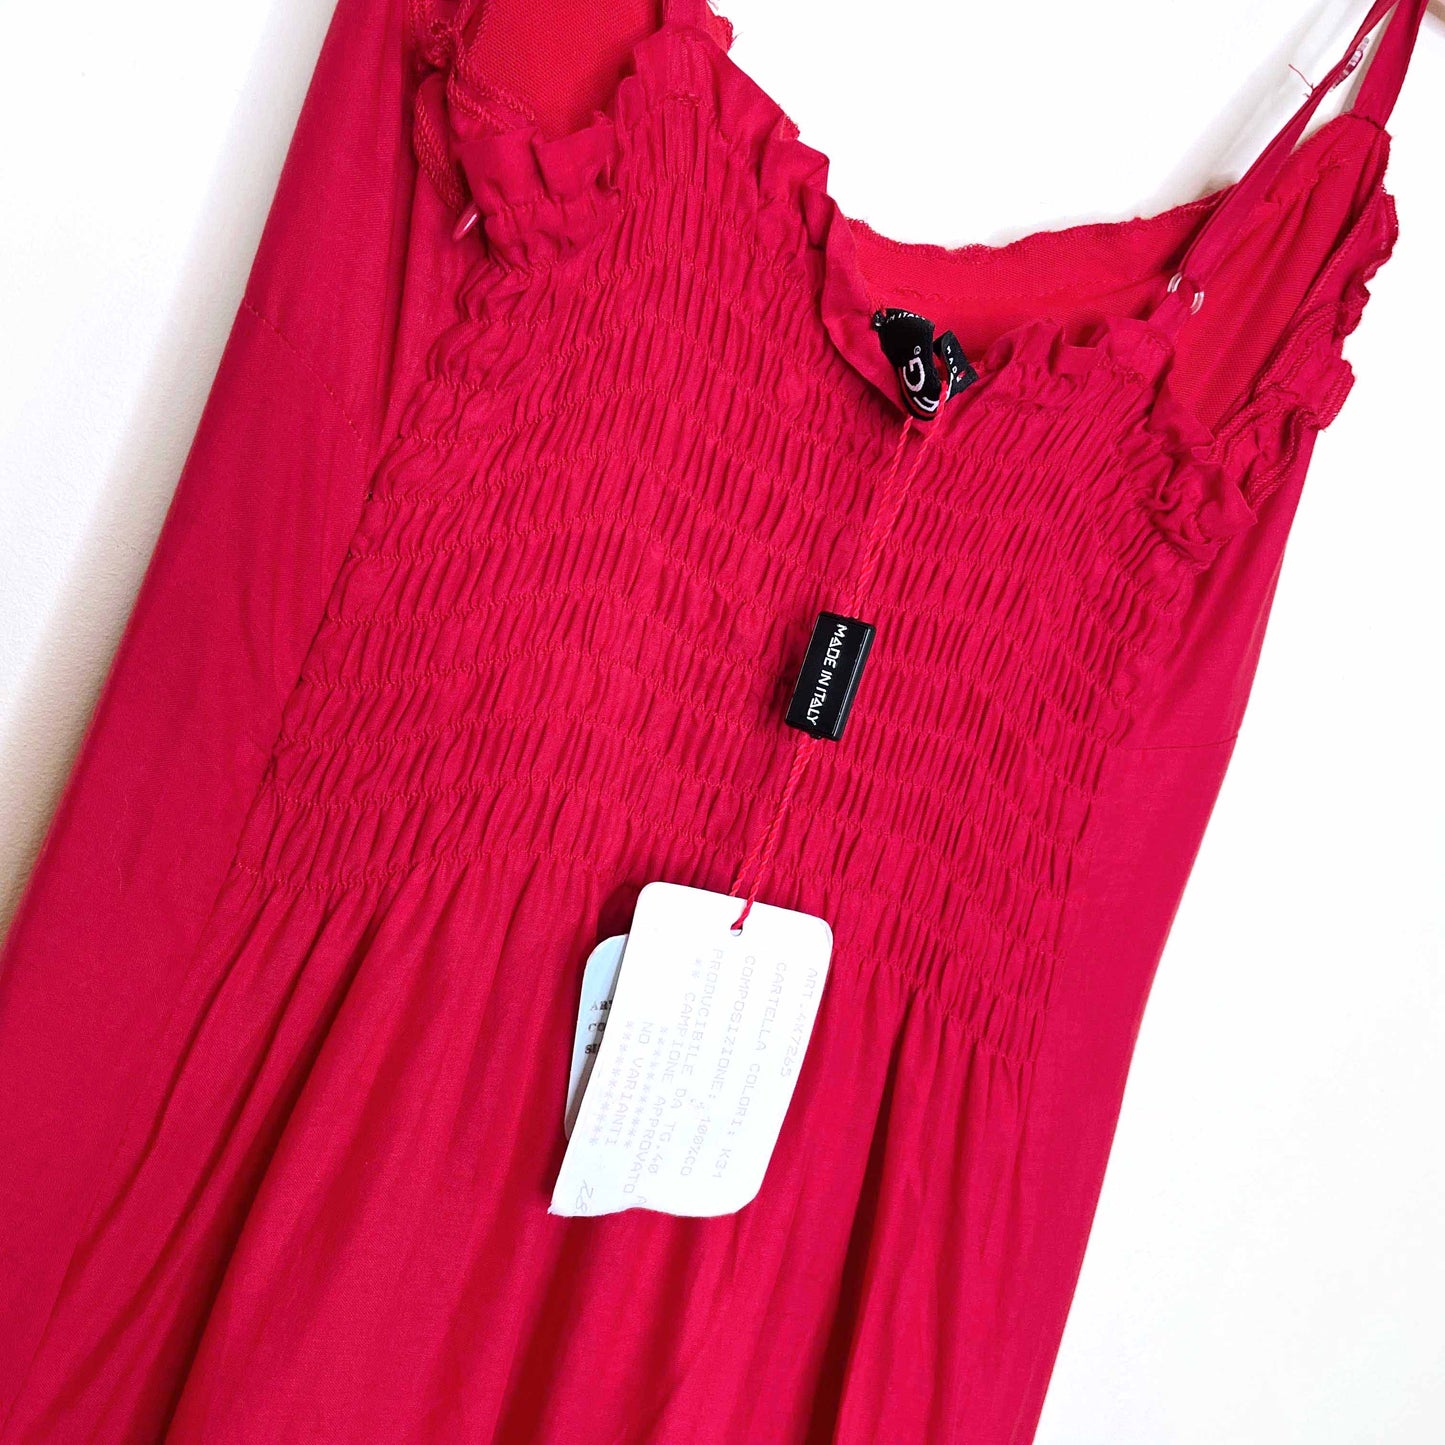 nwt kfg italy red midi dress with lace hem - size 42